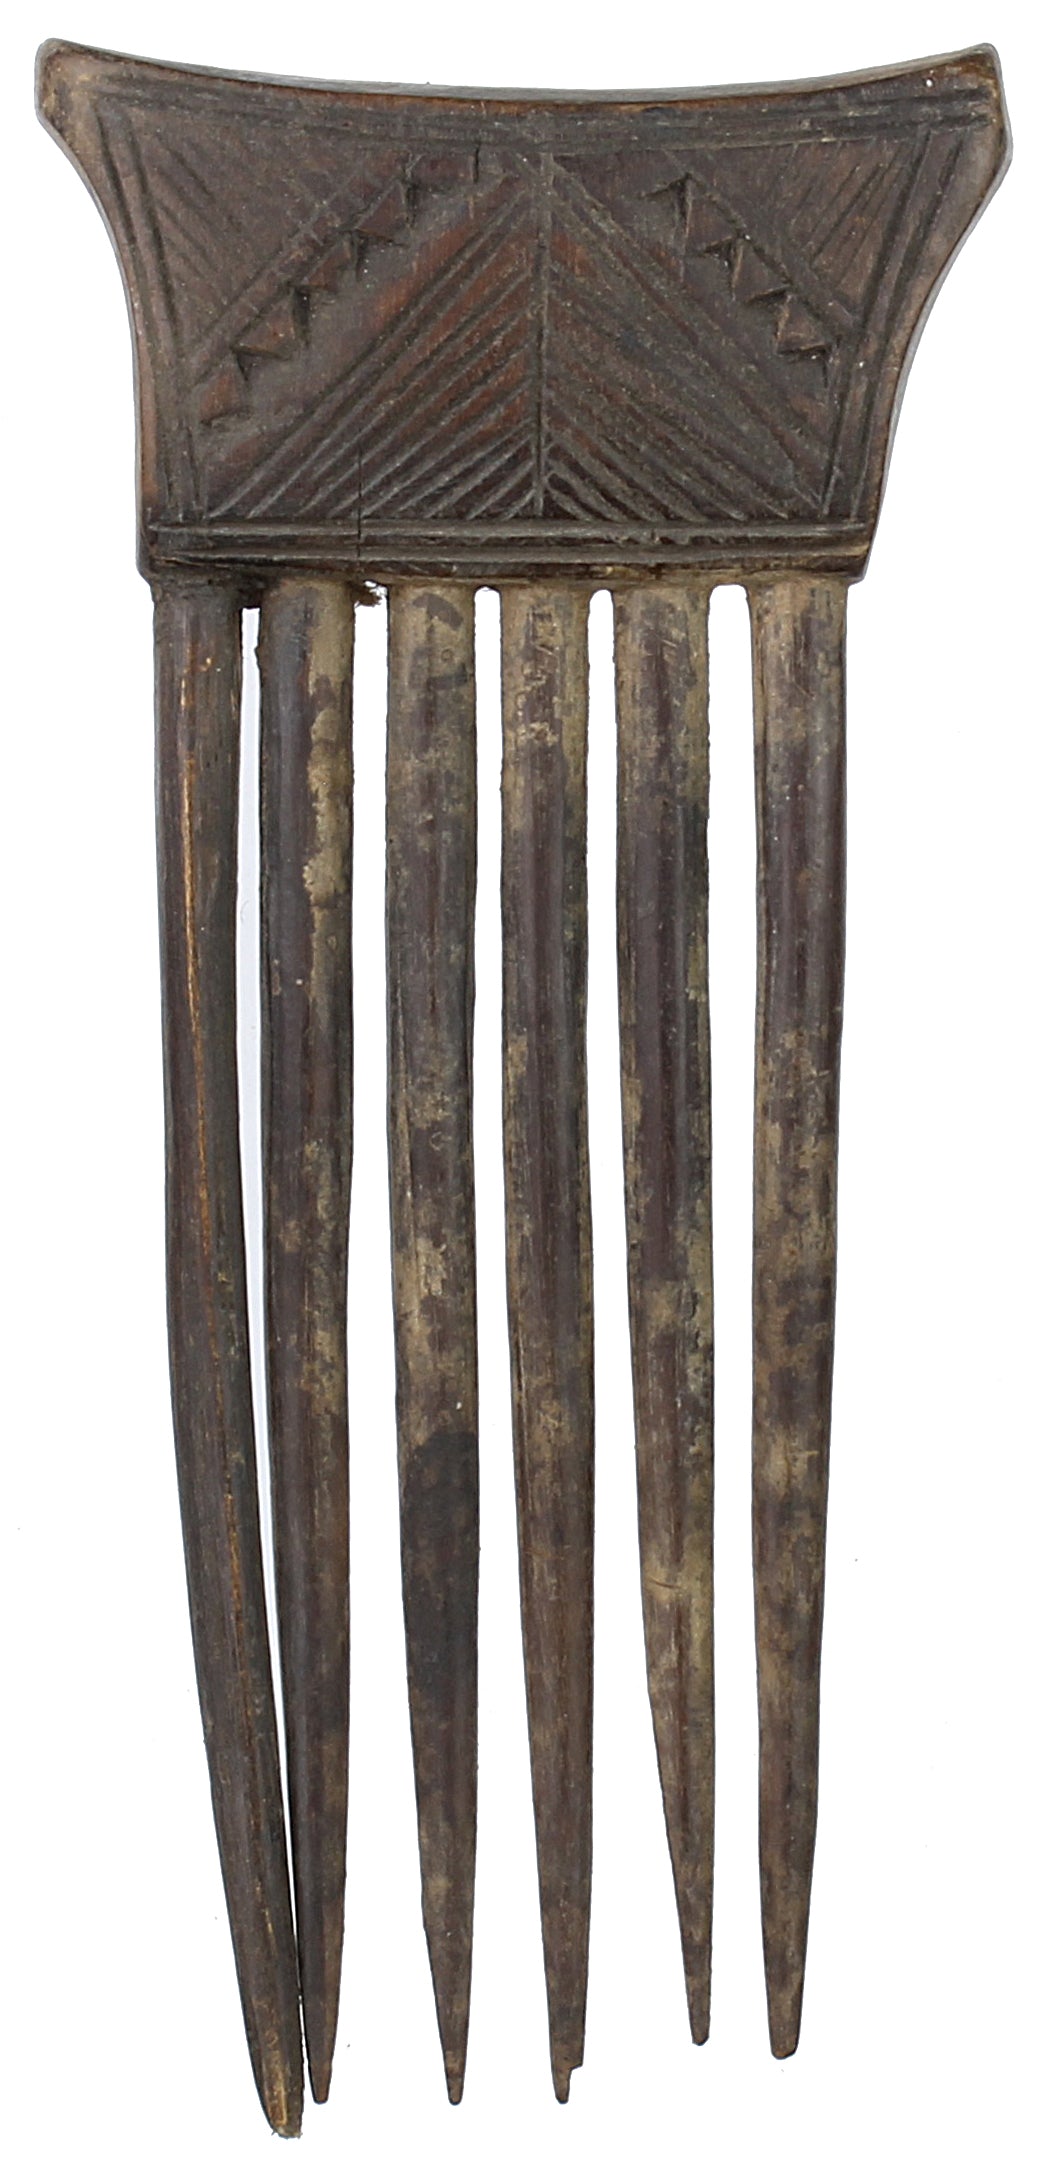 Vintage Baule Comb from Ivory Coast - 4.75" x 2.75" - Niger Bend